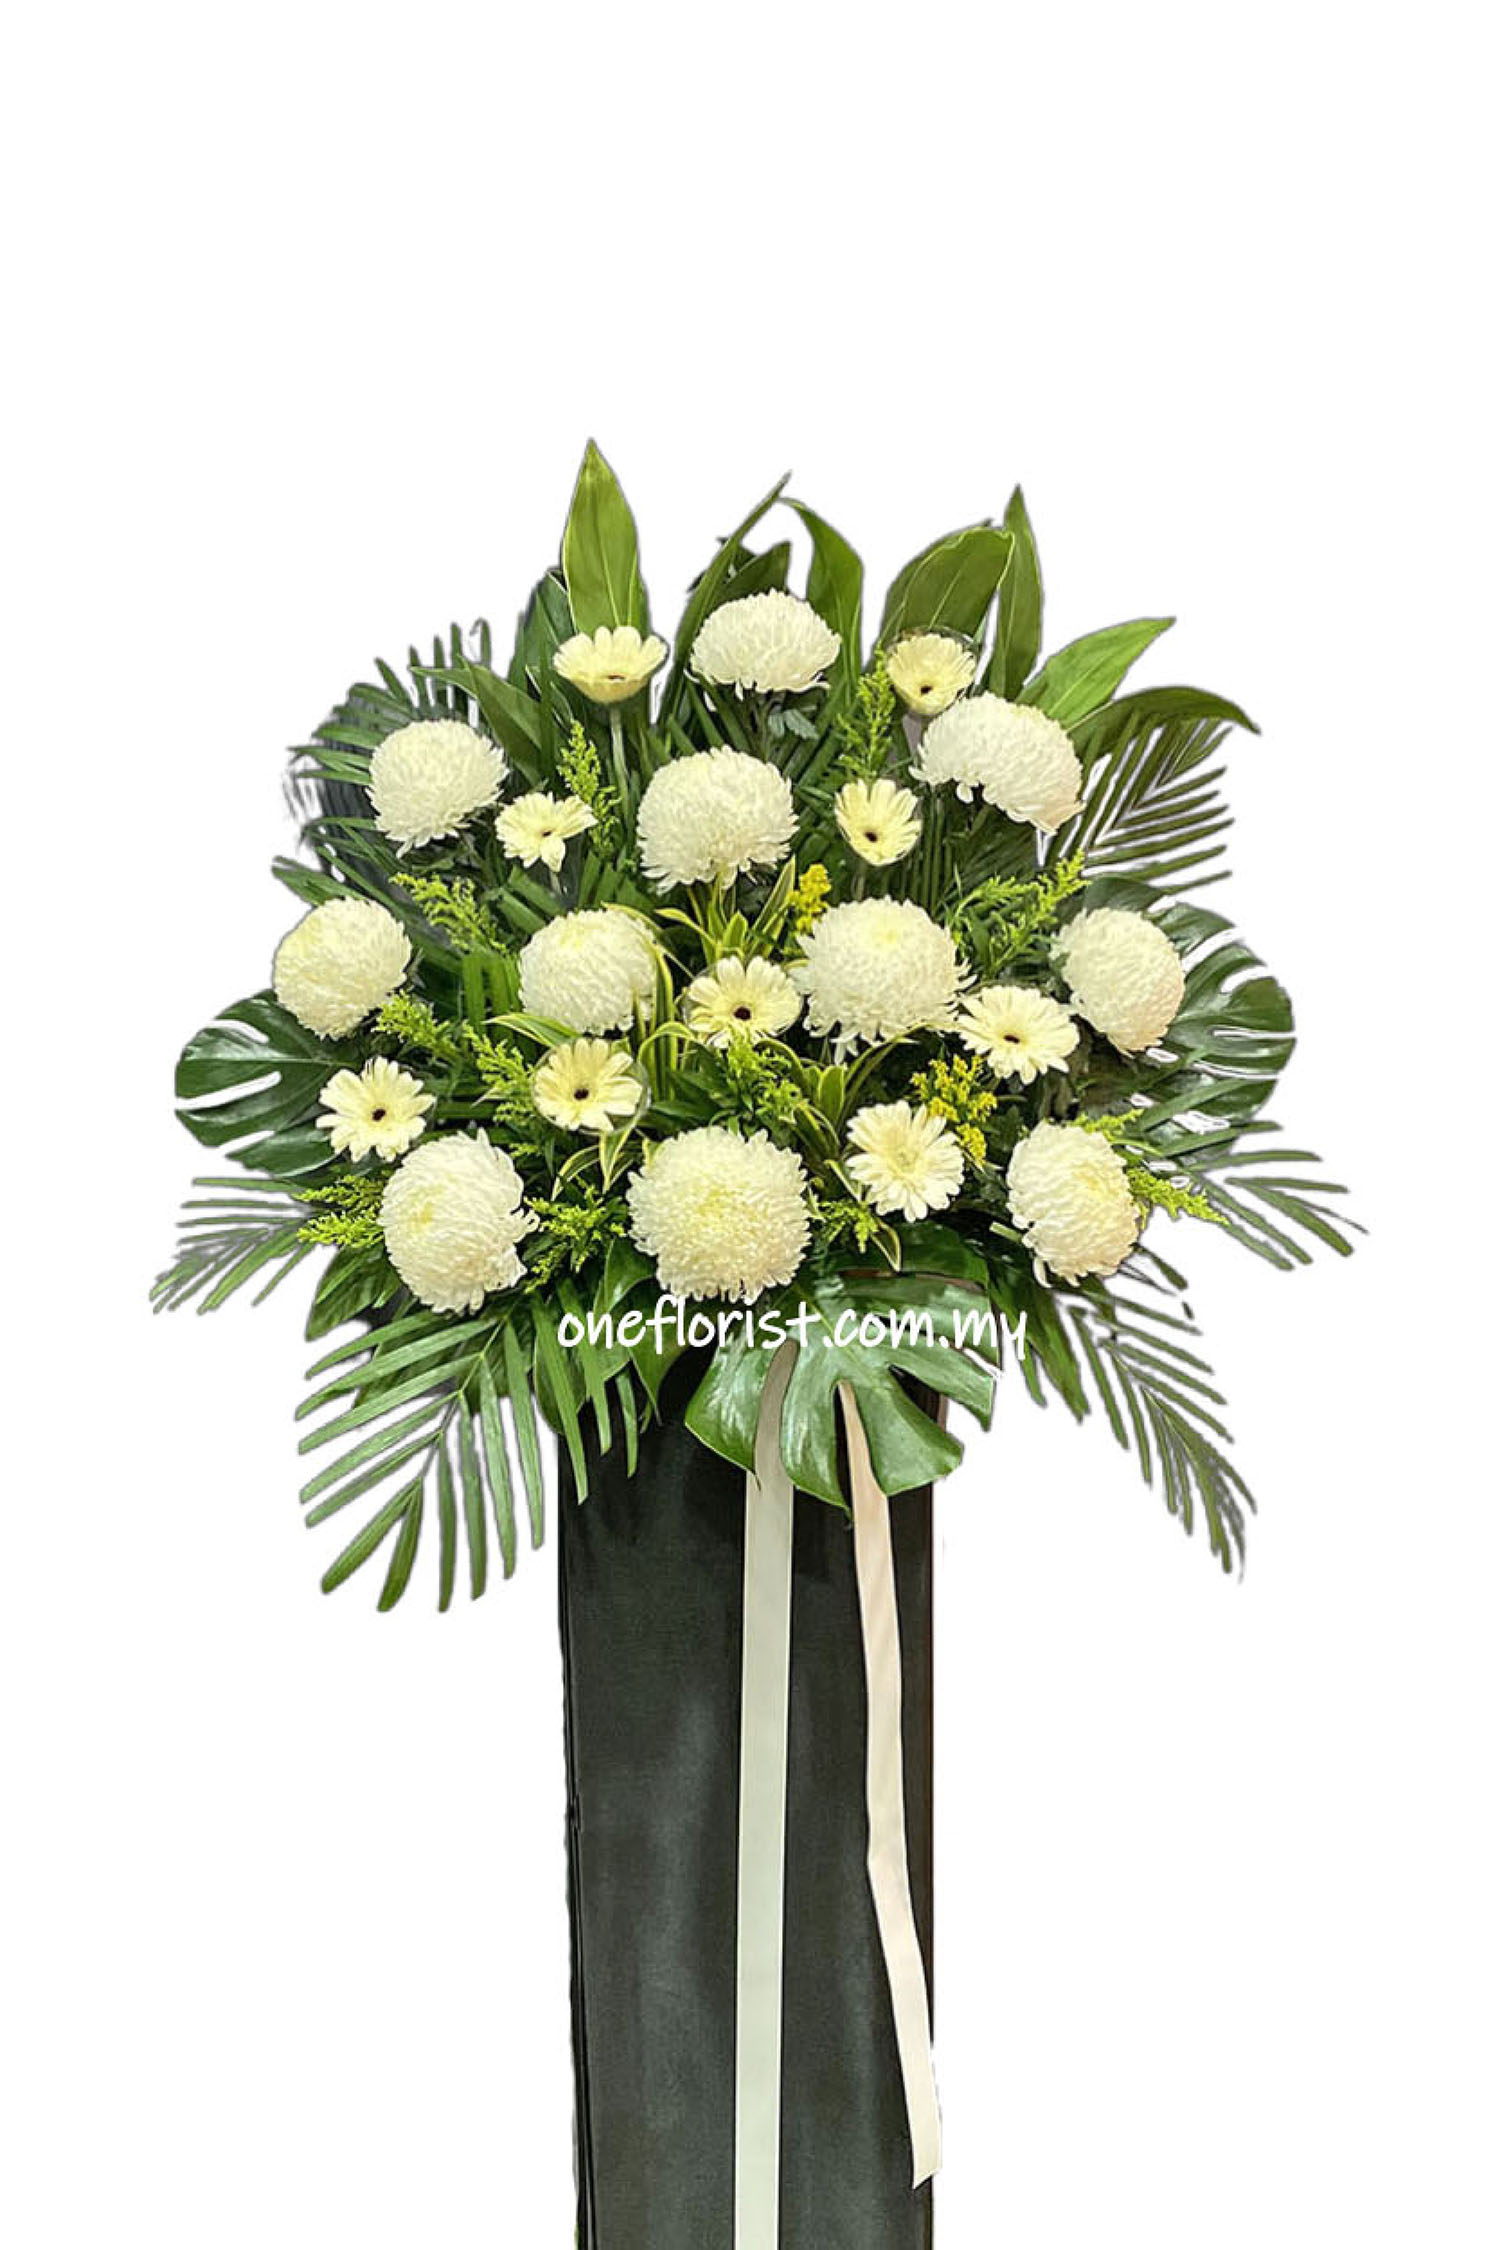 Condolence flower in white